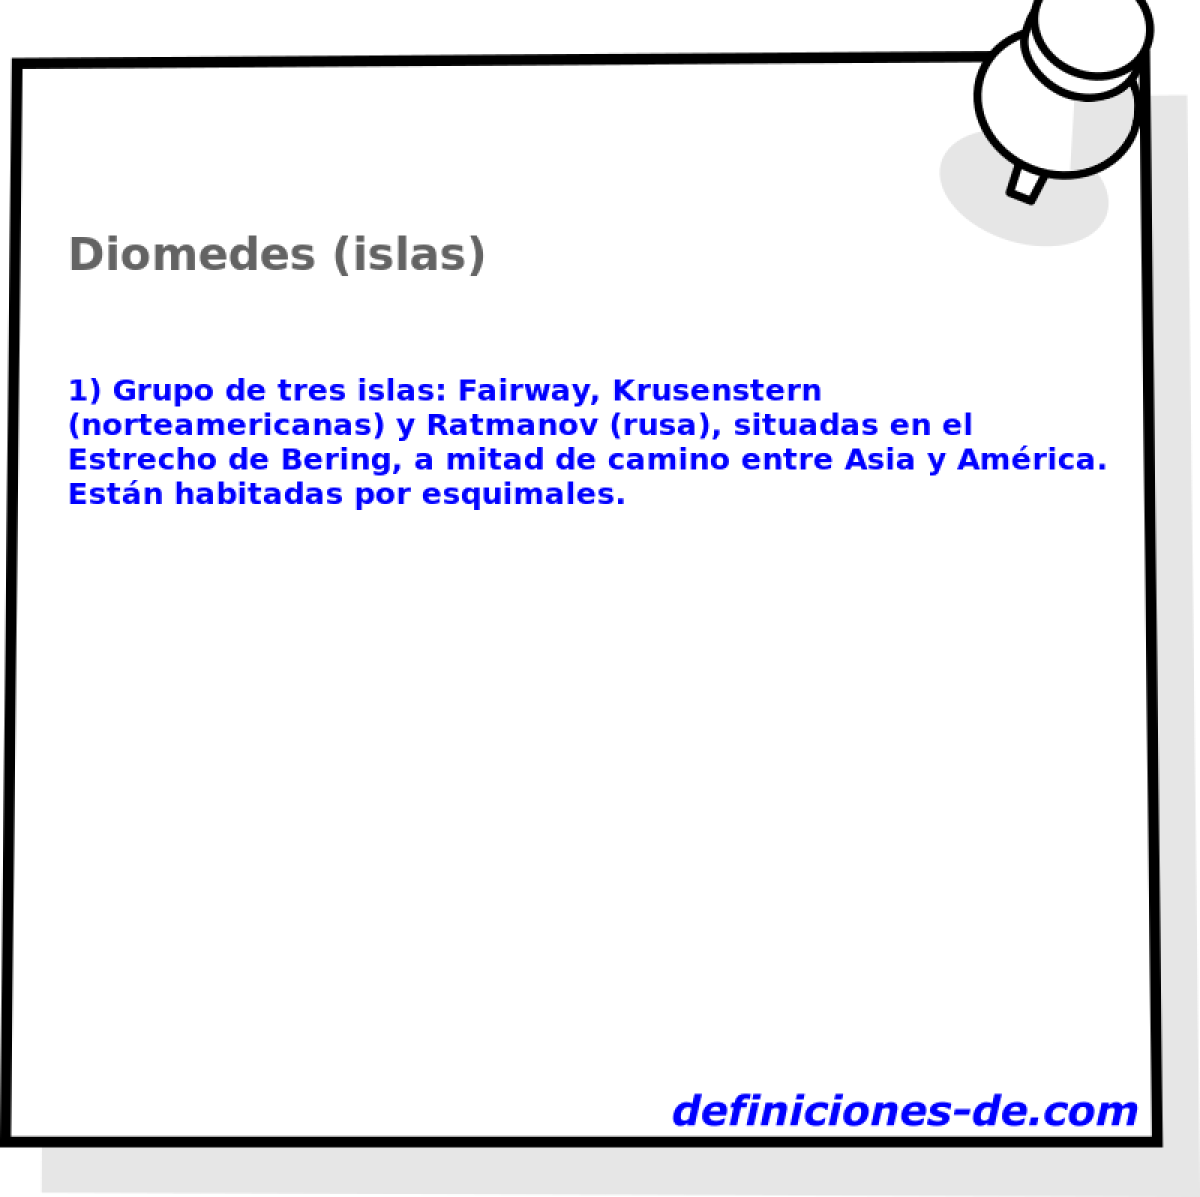 Diomedes (islas) 